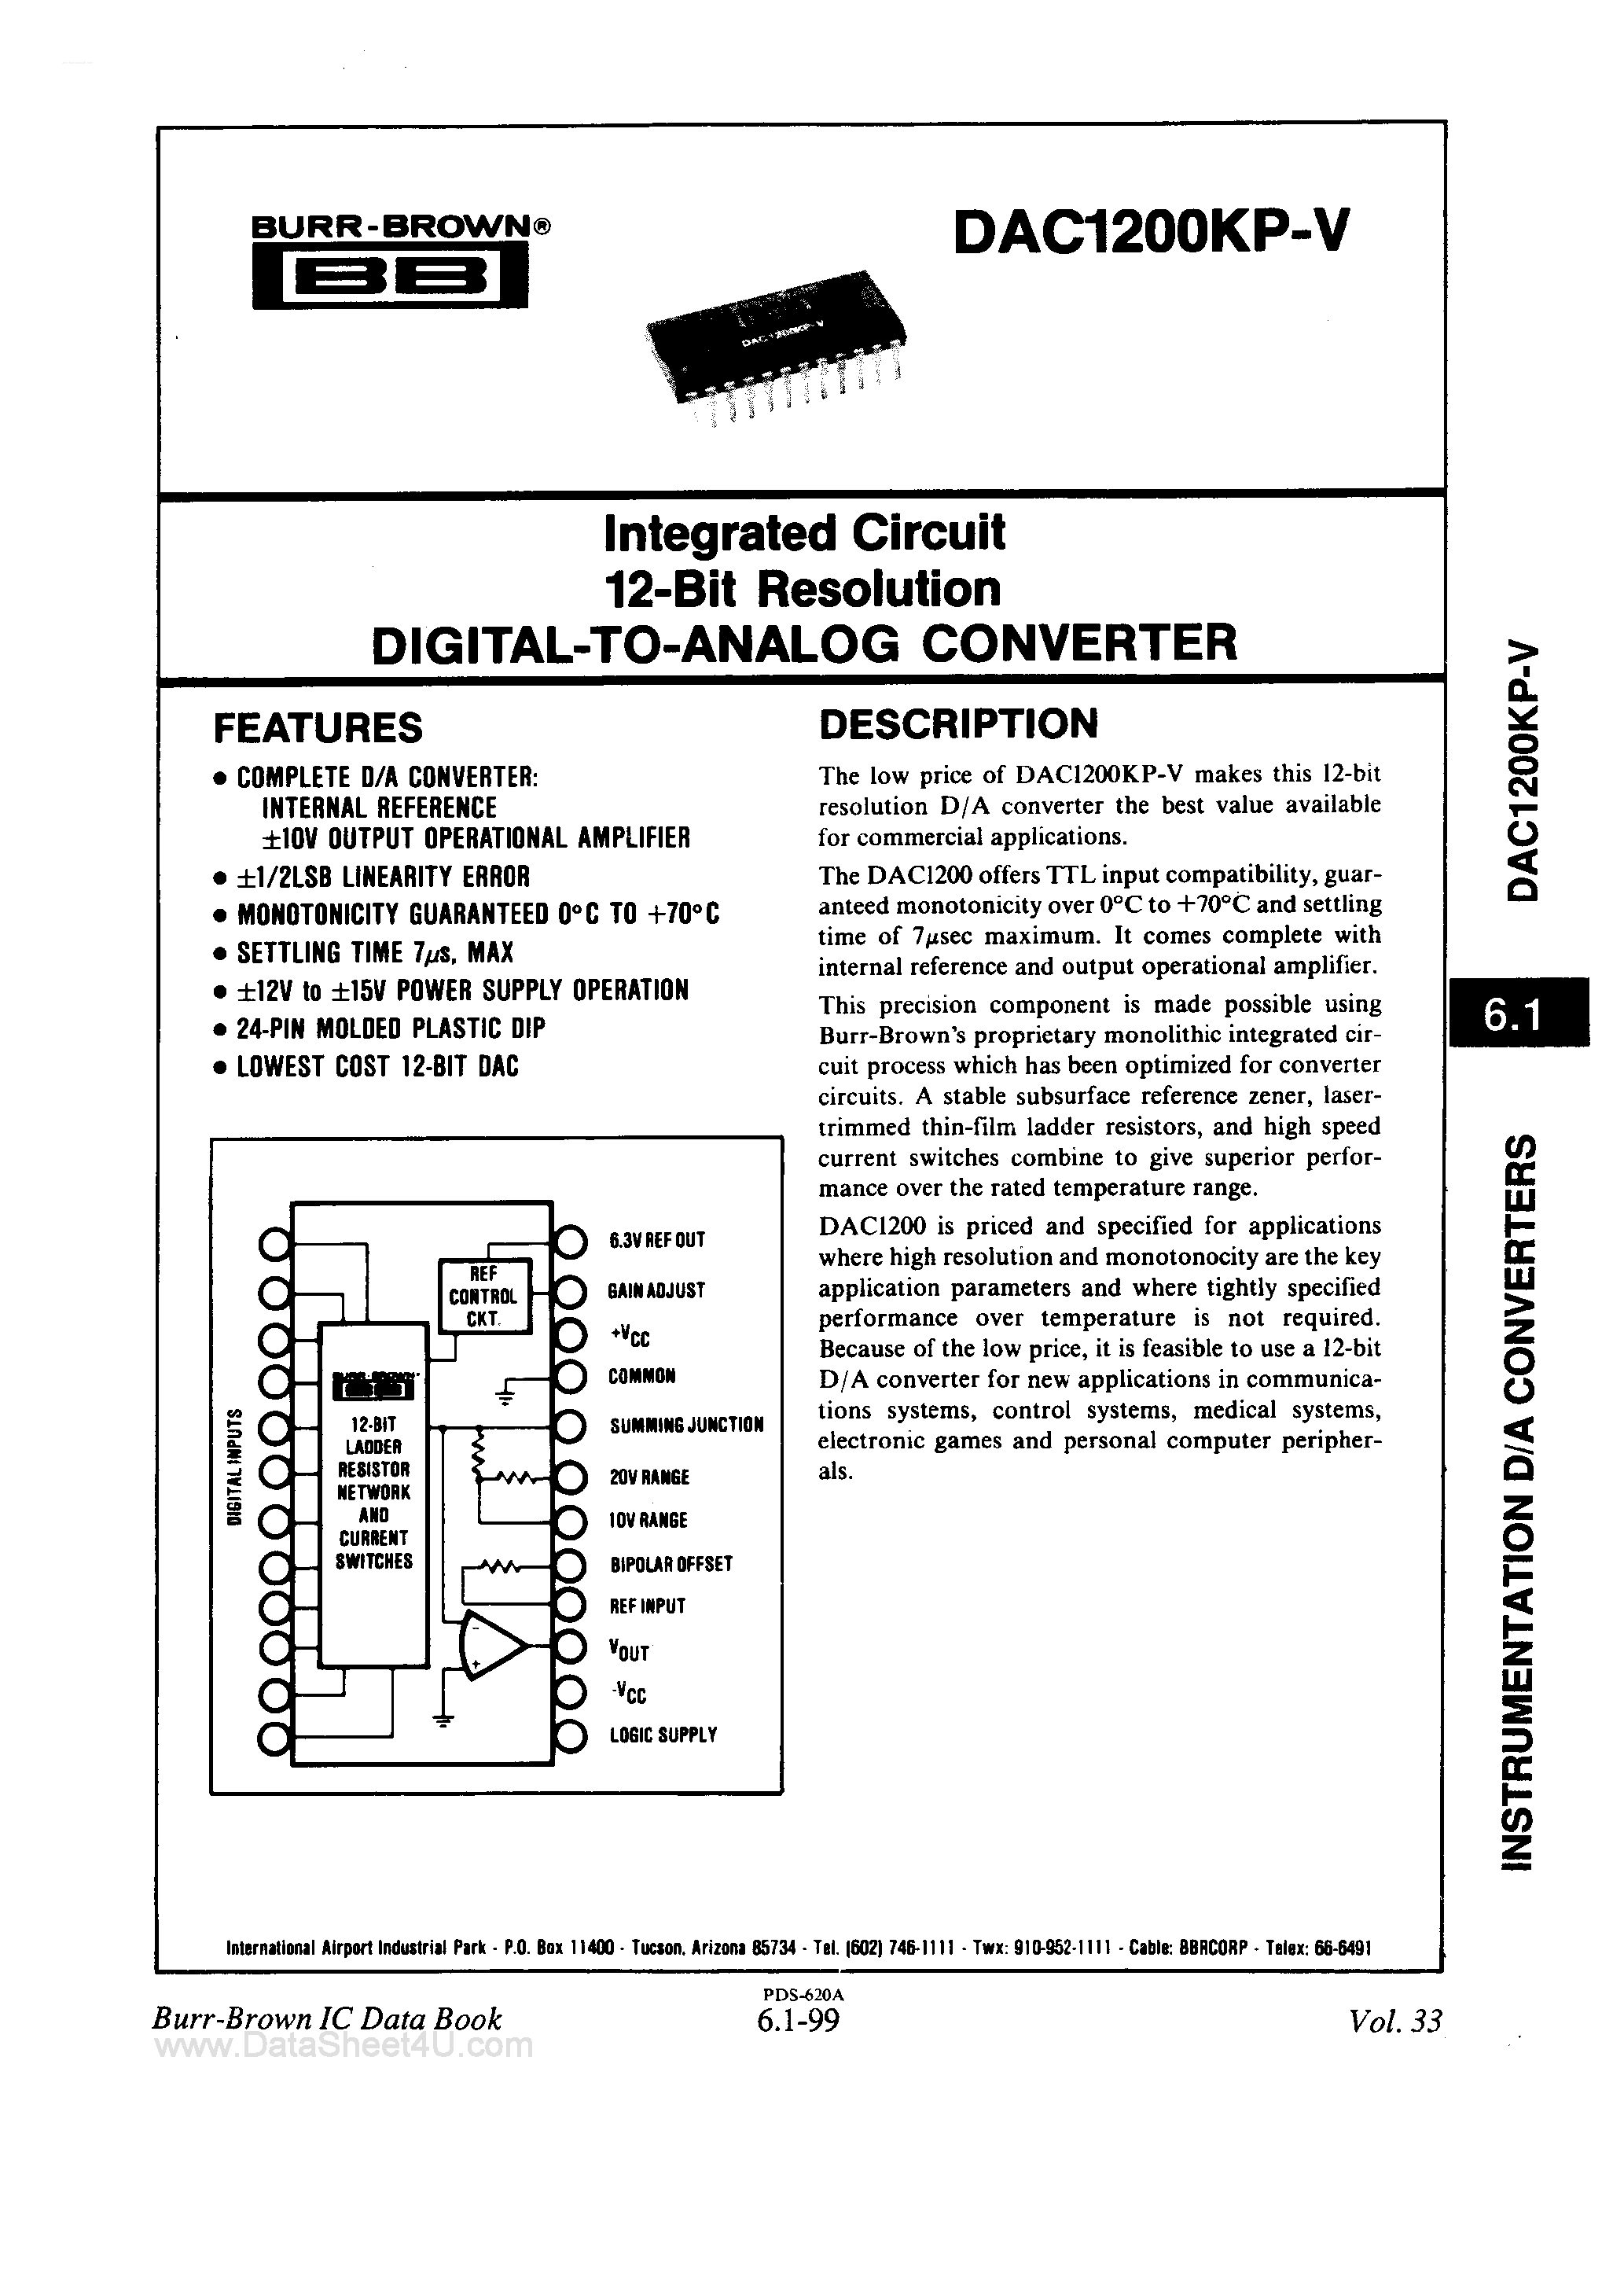 Datasheet DAC1200KP-V - Integrated Circuit 12-Bit Resolution Digital to Analog Converter page 1